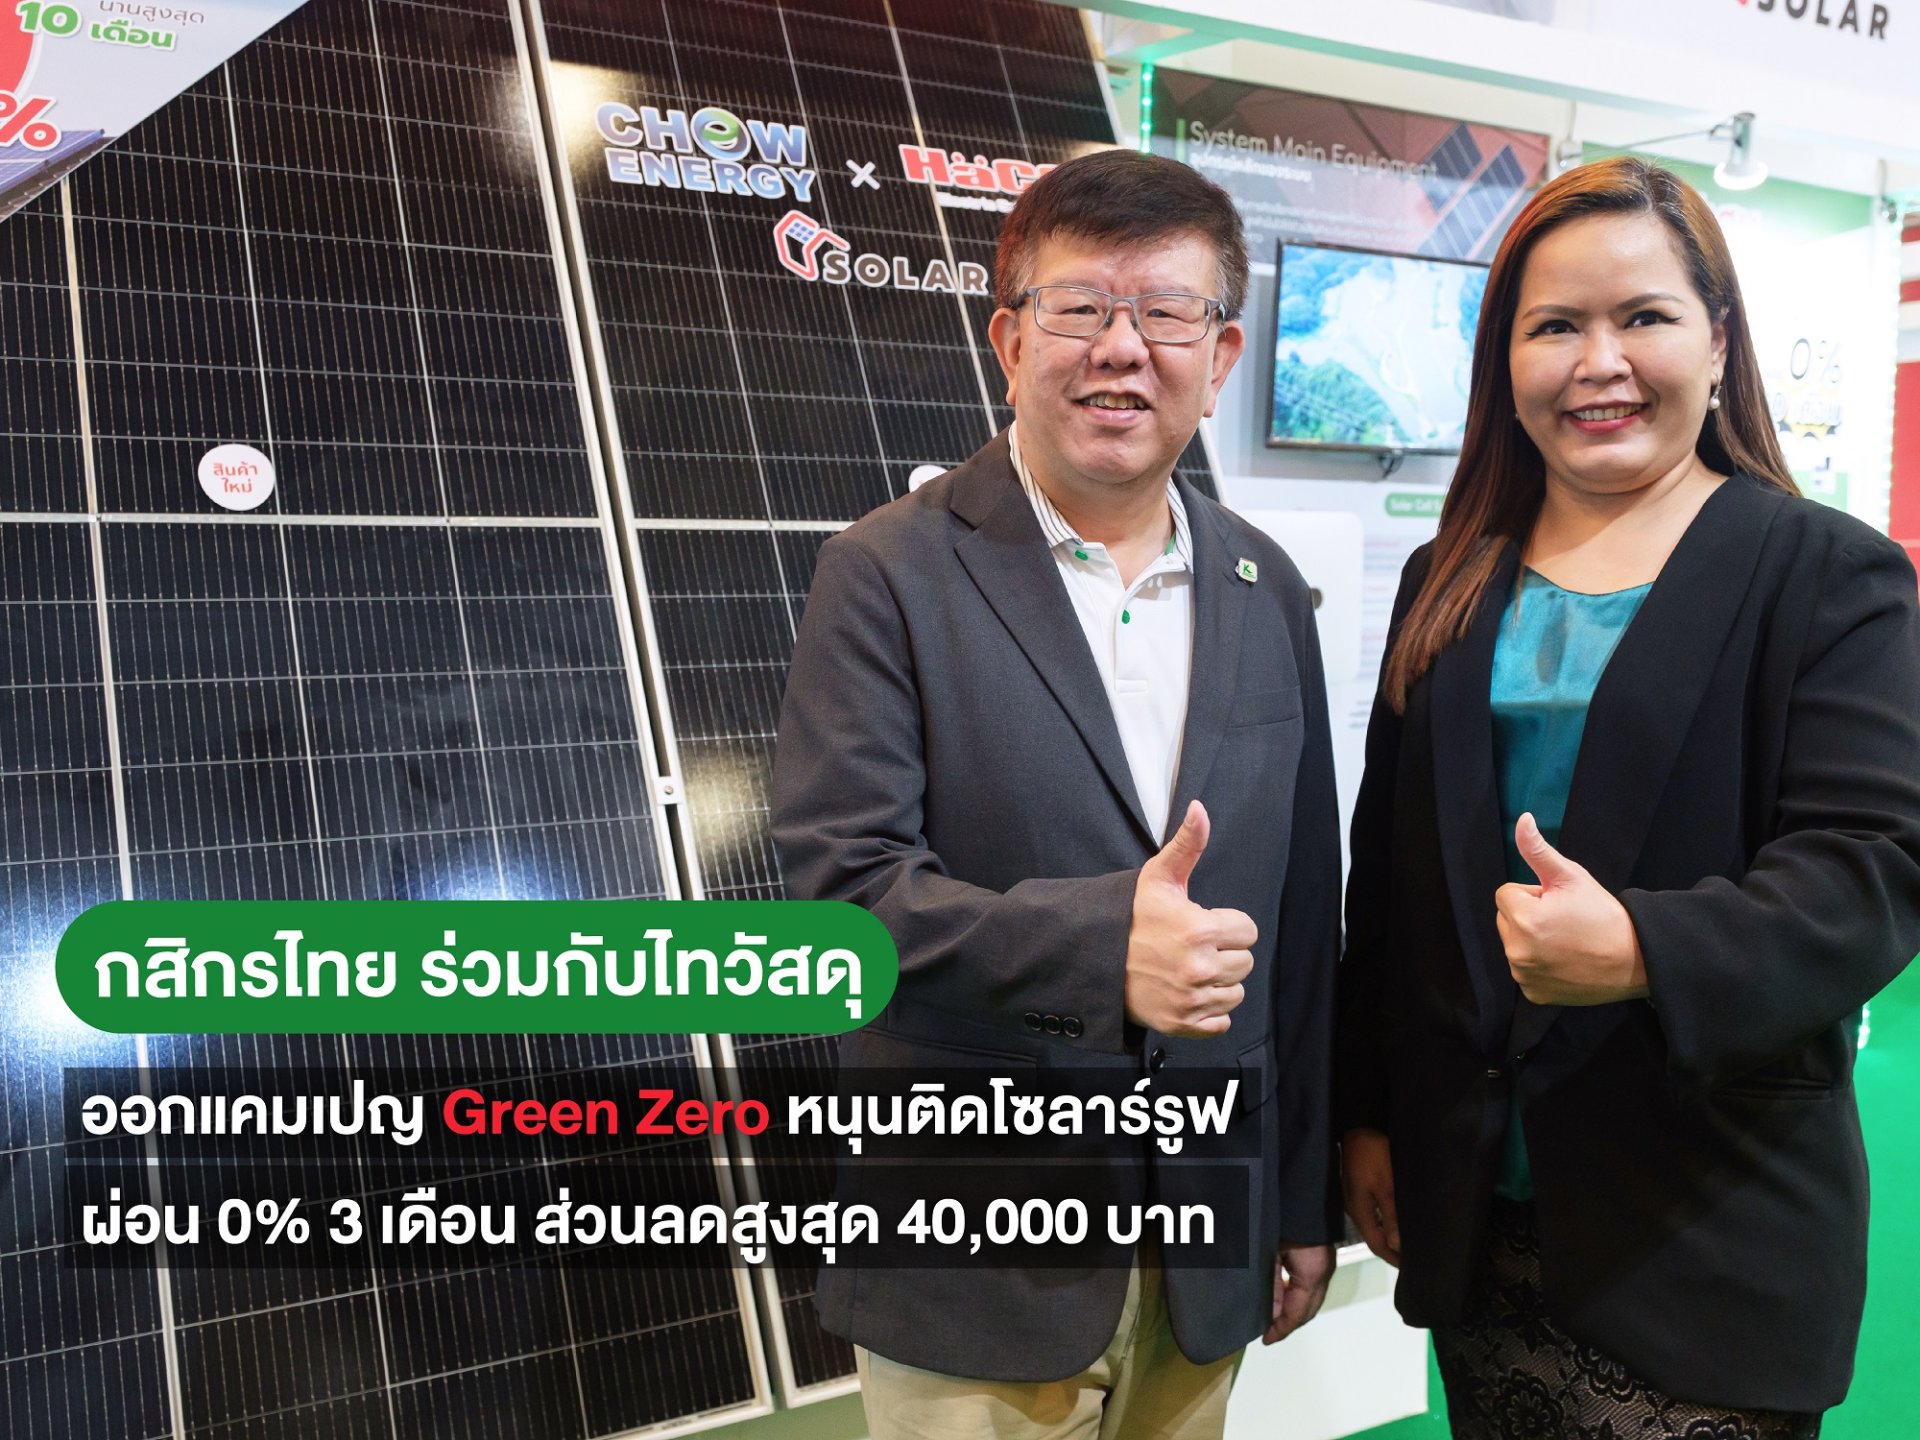 KBANK จับมือ ไทวัสดุ กระตุ้นคนไทยรักษ์โลก ผ่านแคมเปญสินเชื่อพิเศษ Green Zero 